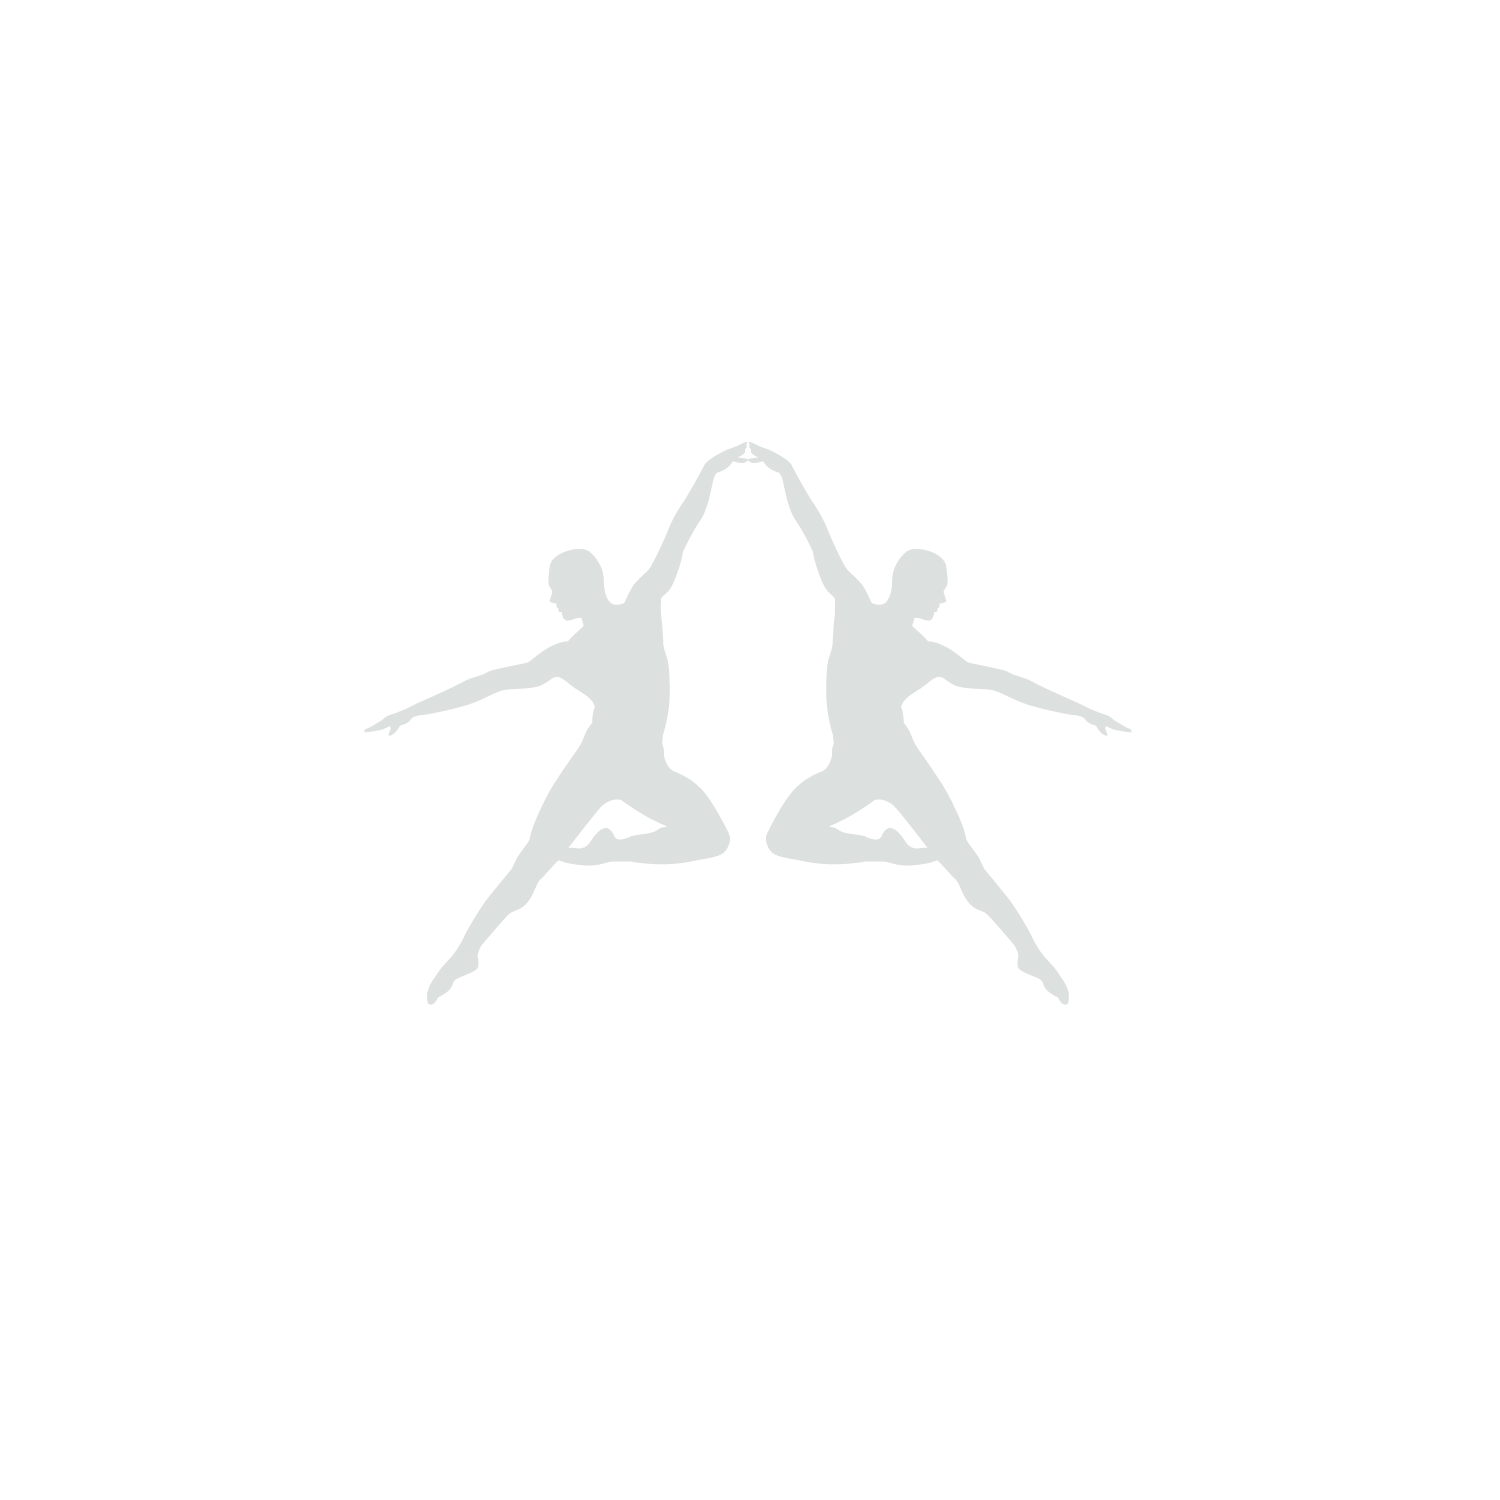 London Dance Photography